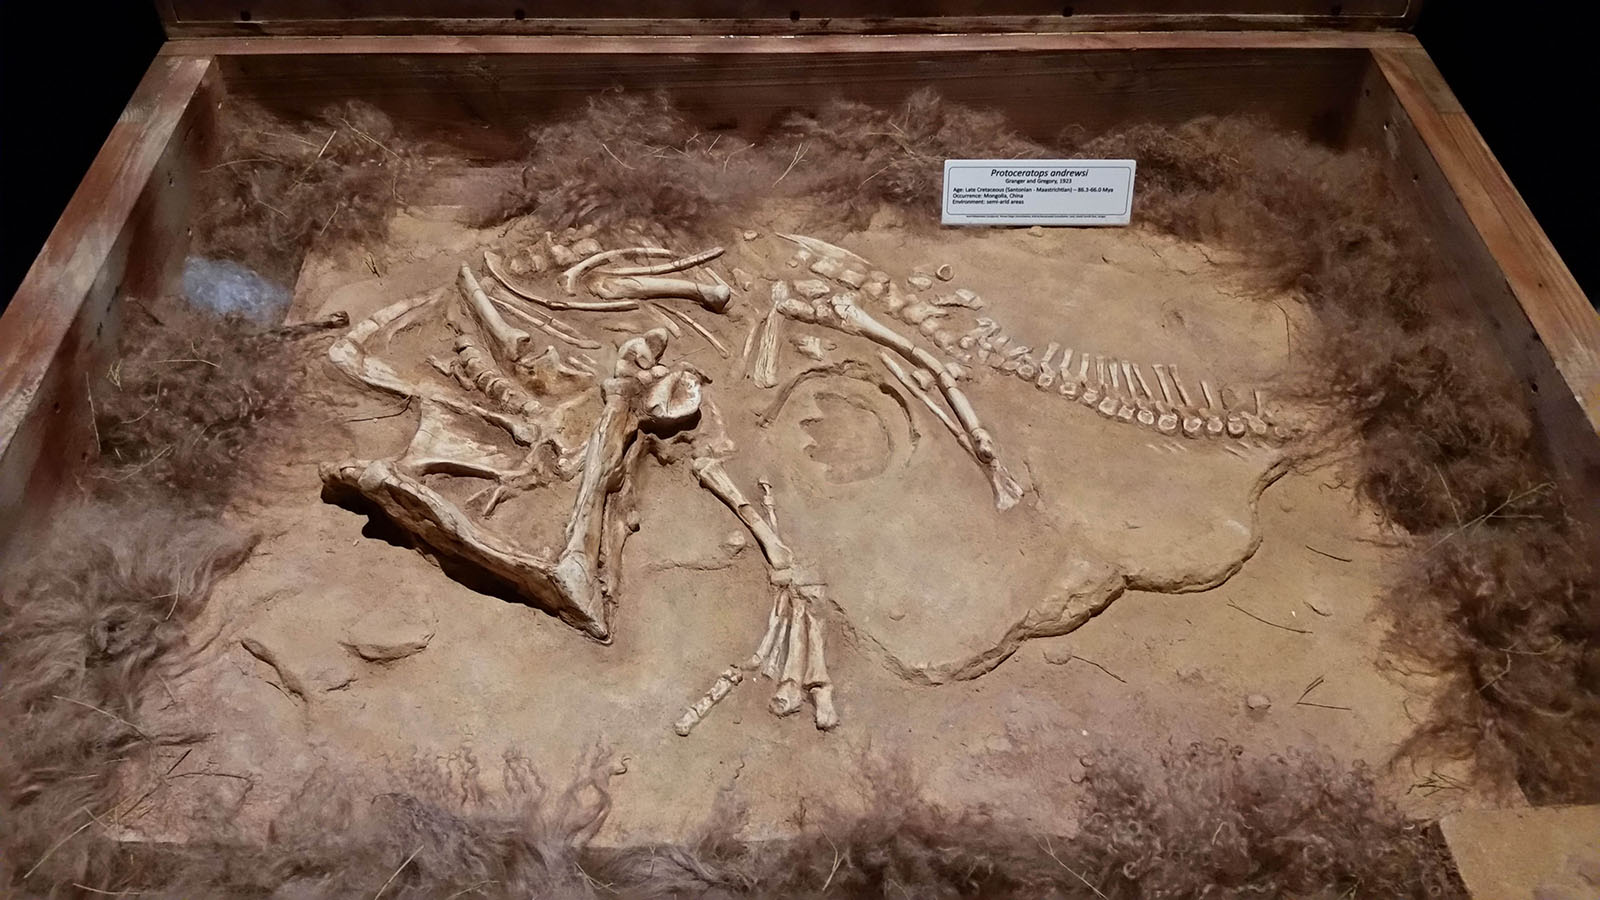 Where Dinosaurs Roamed - Fossils and Paleontology (U.S. National